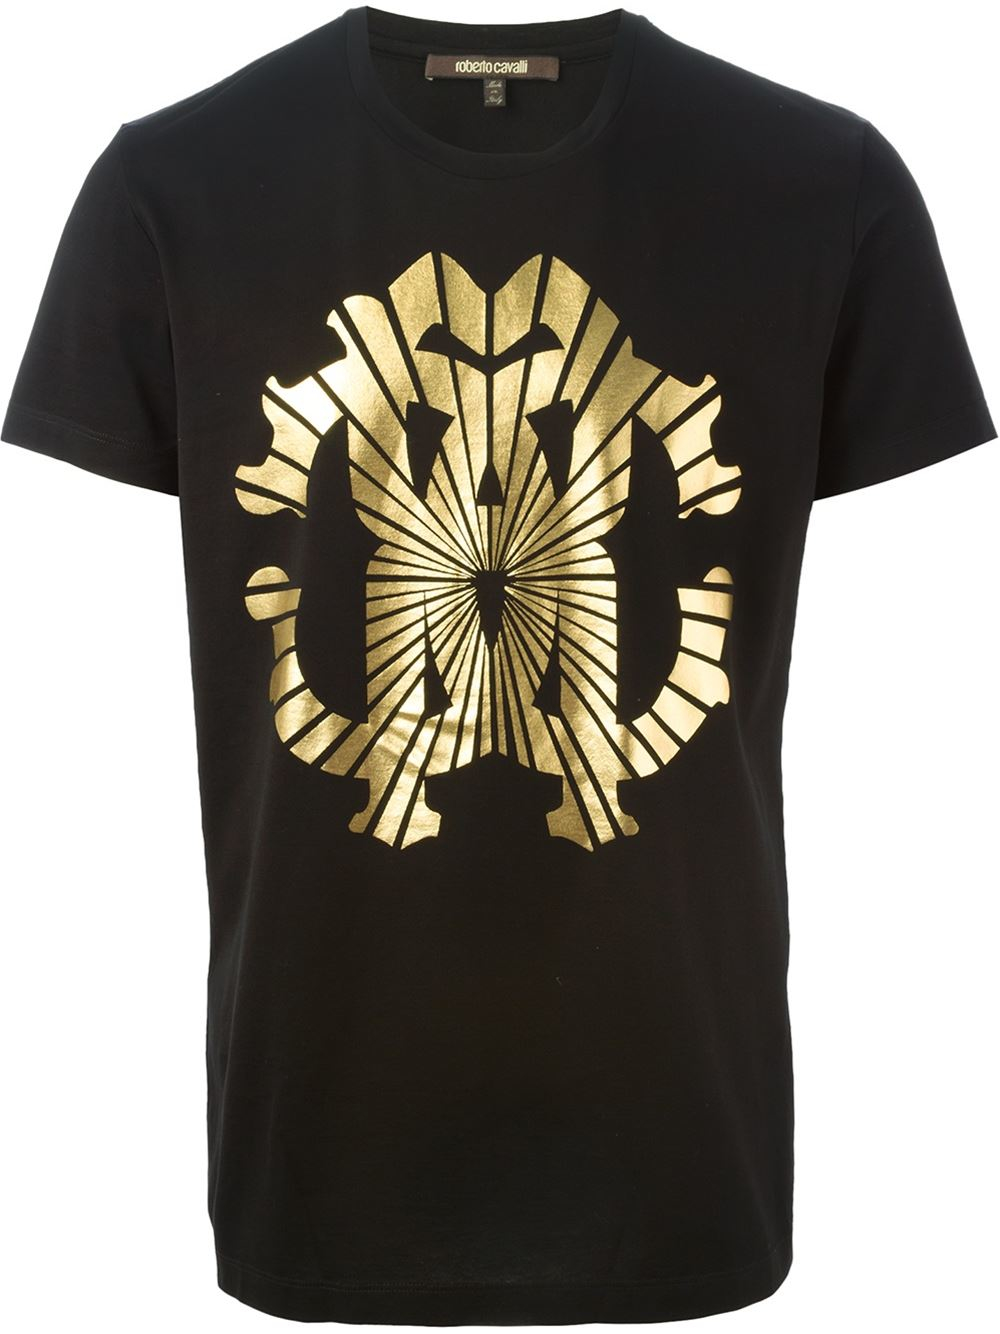 Roberto cavalli Logo Print T-shirt in Black for Men | Lyst